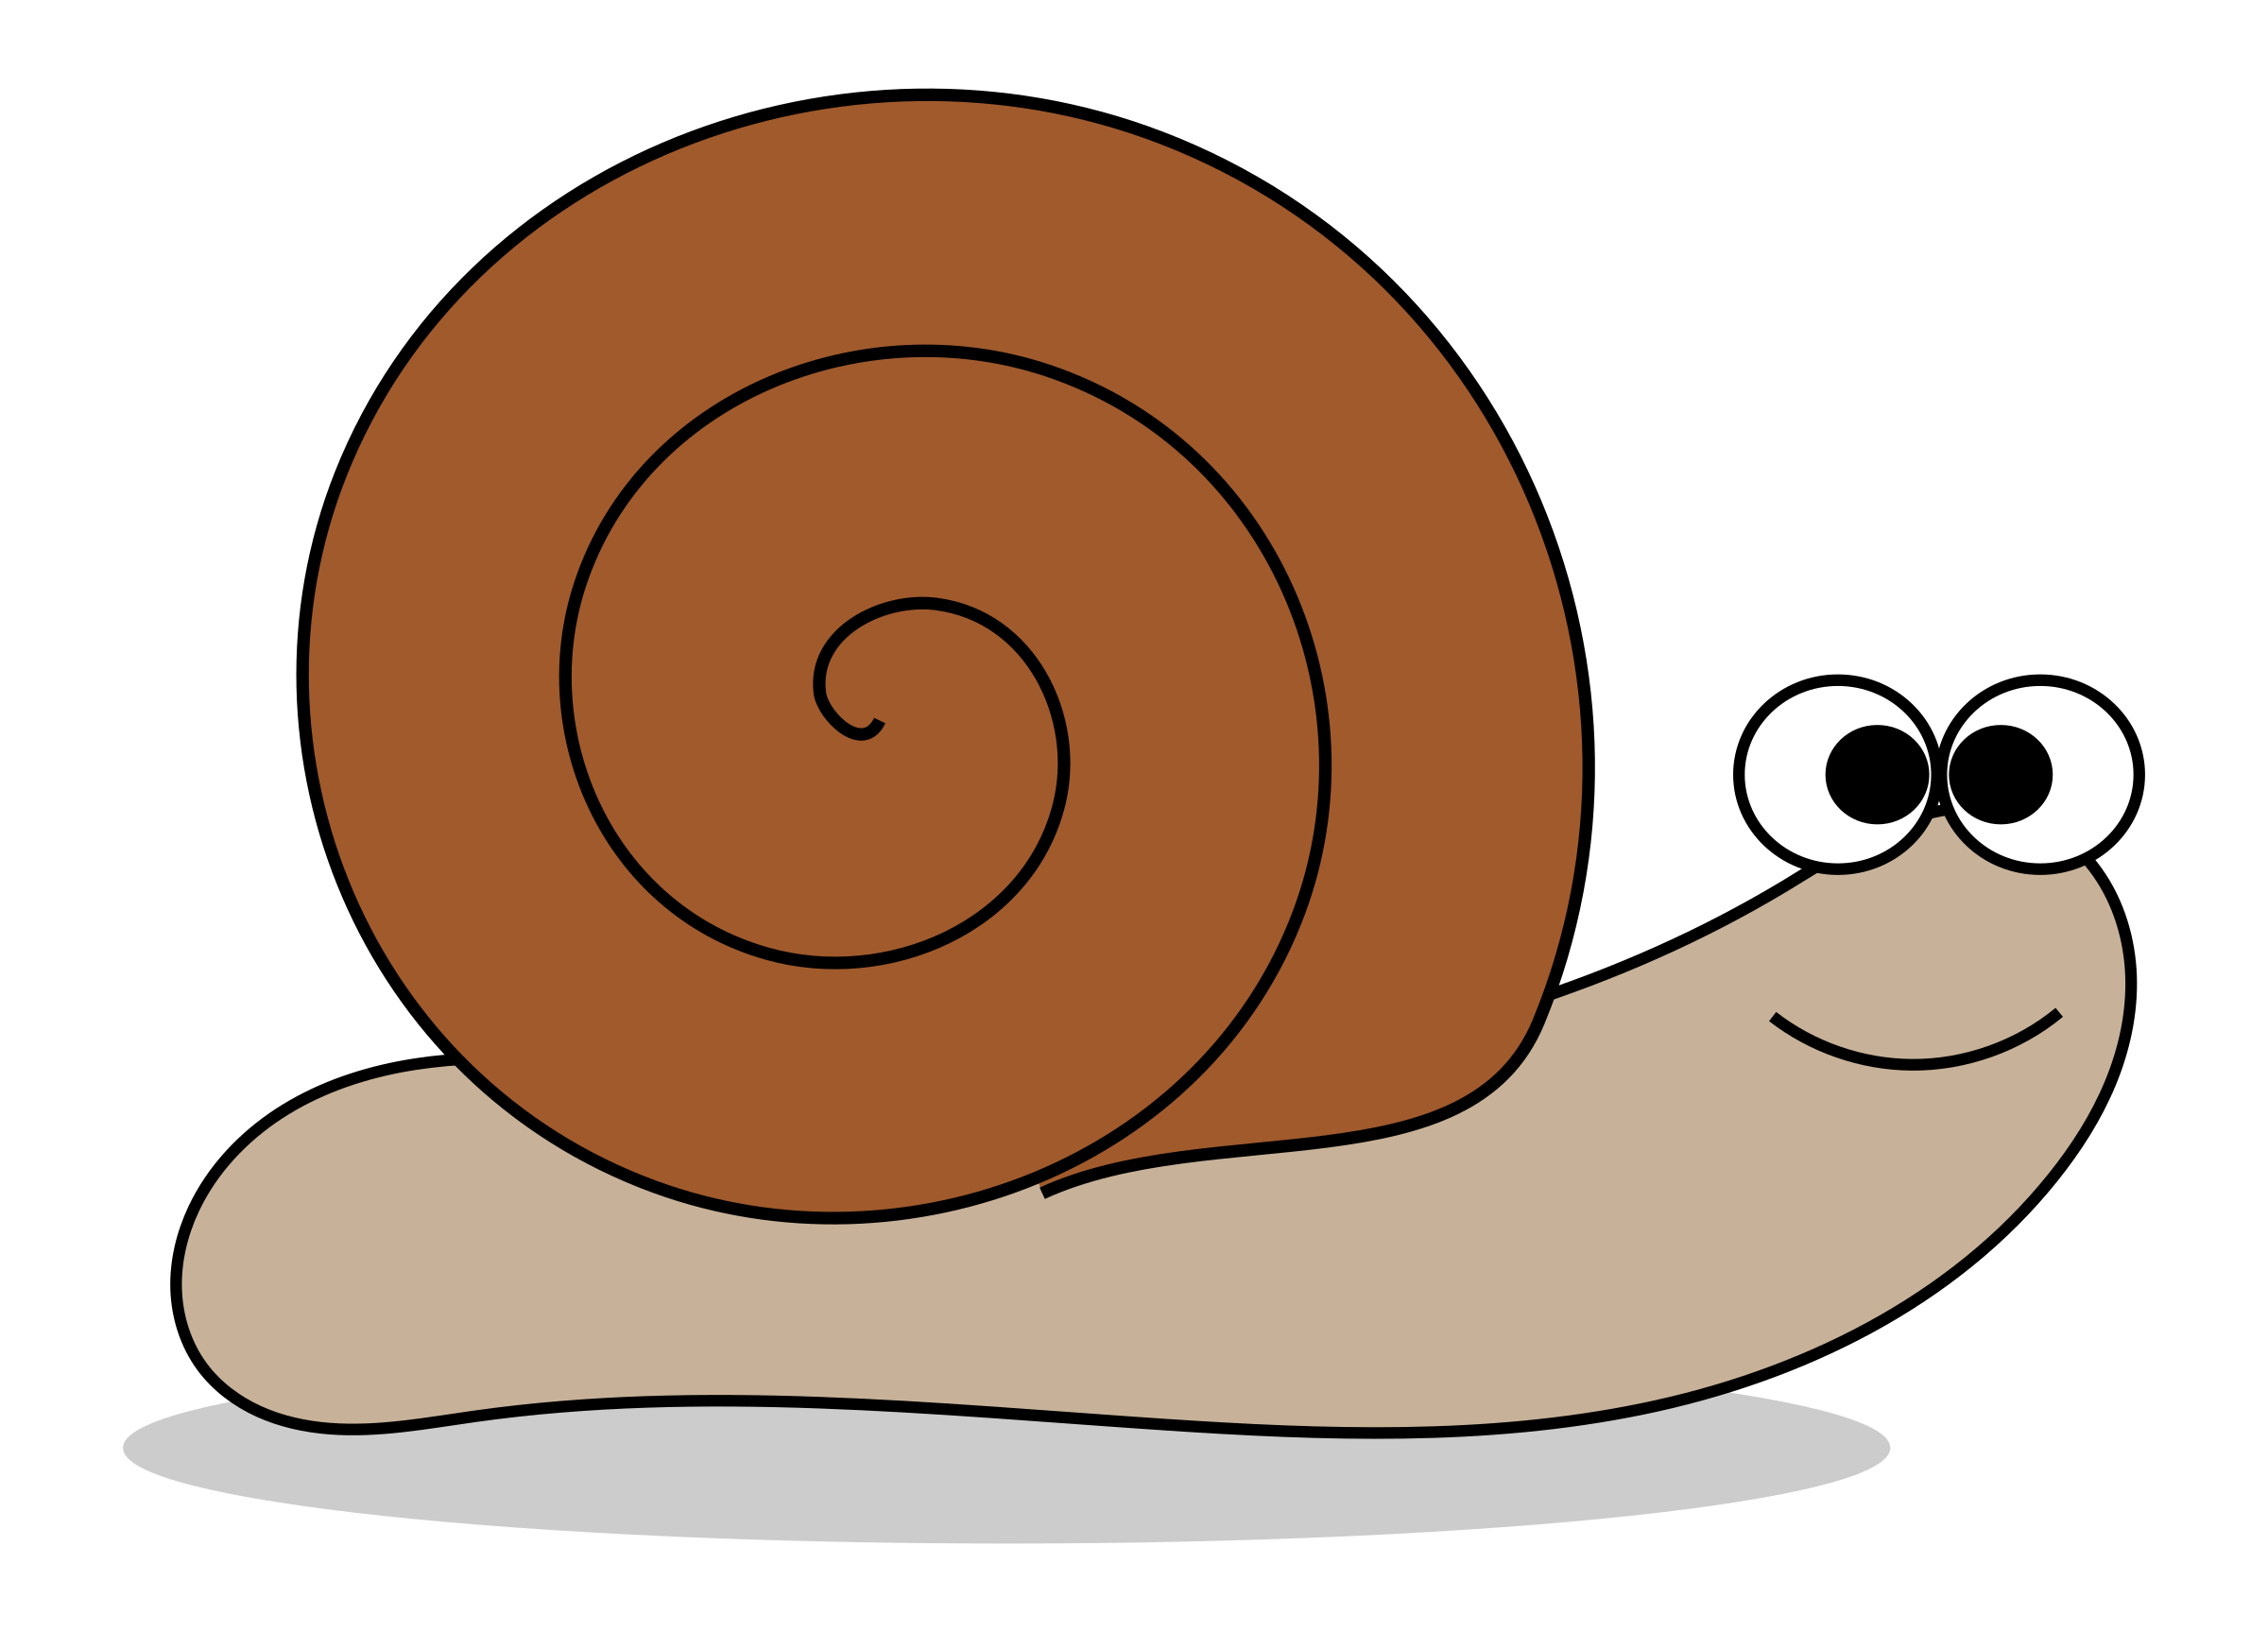 Cartoon snail clipart free public domain image